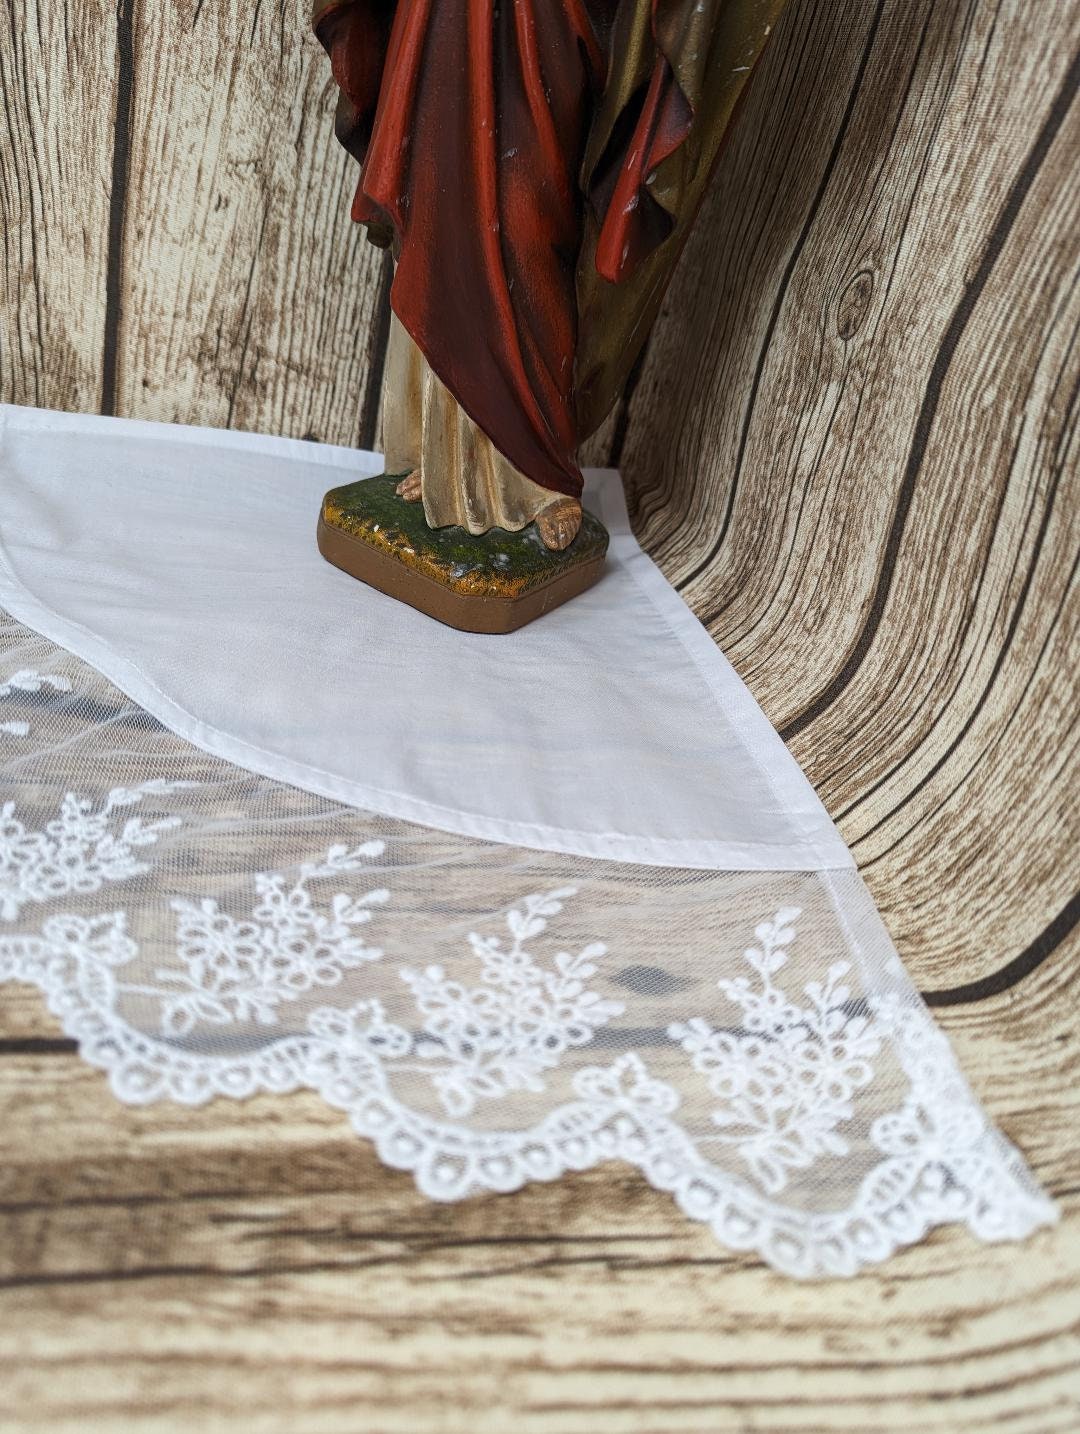 Corner shelf cloth, Altar cloth, Polcotton with lace edging